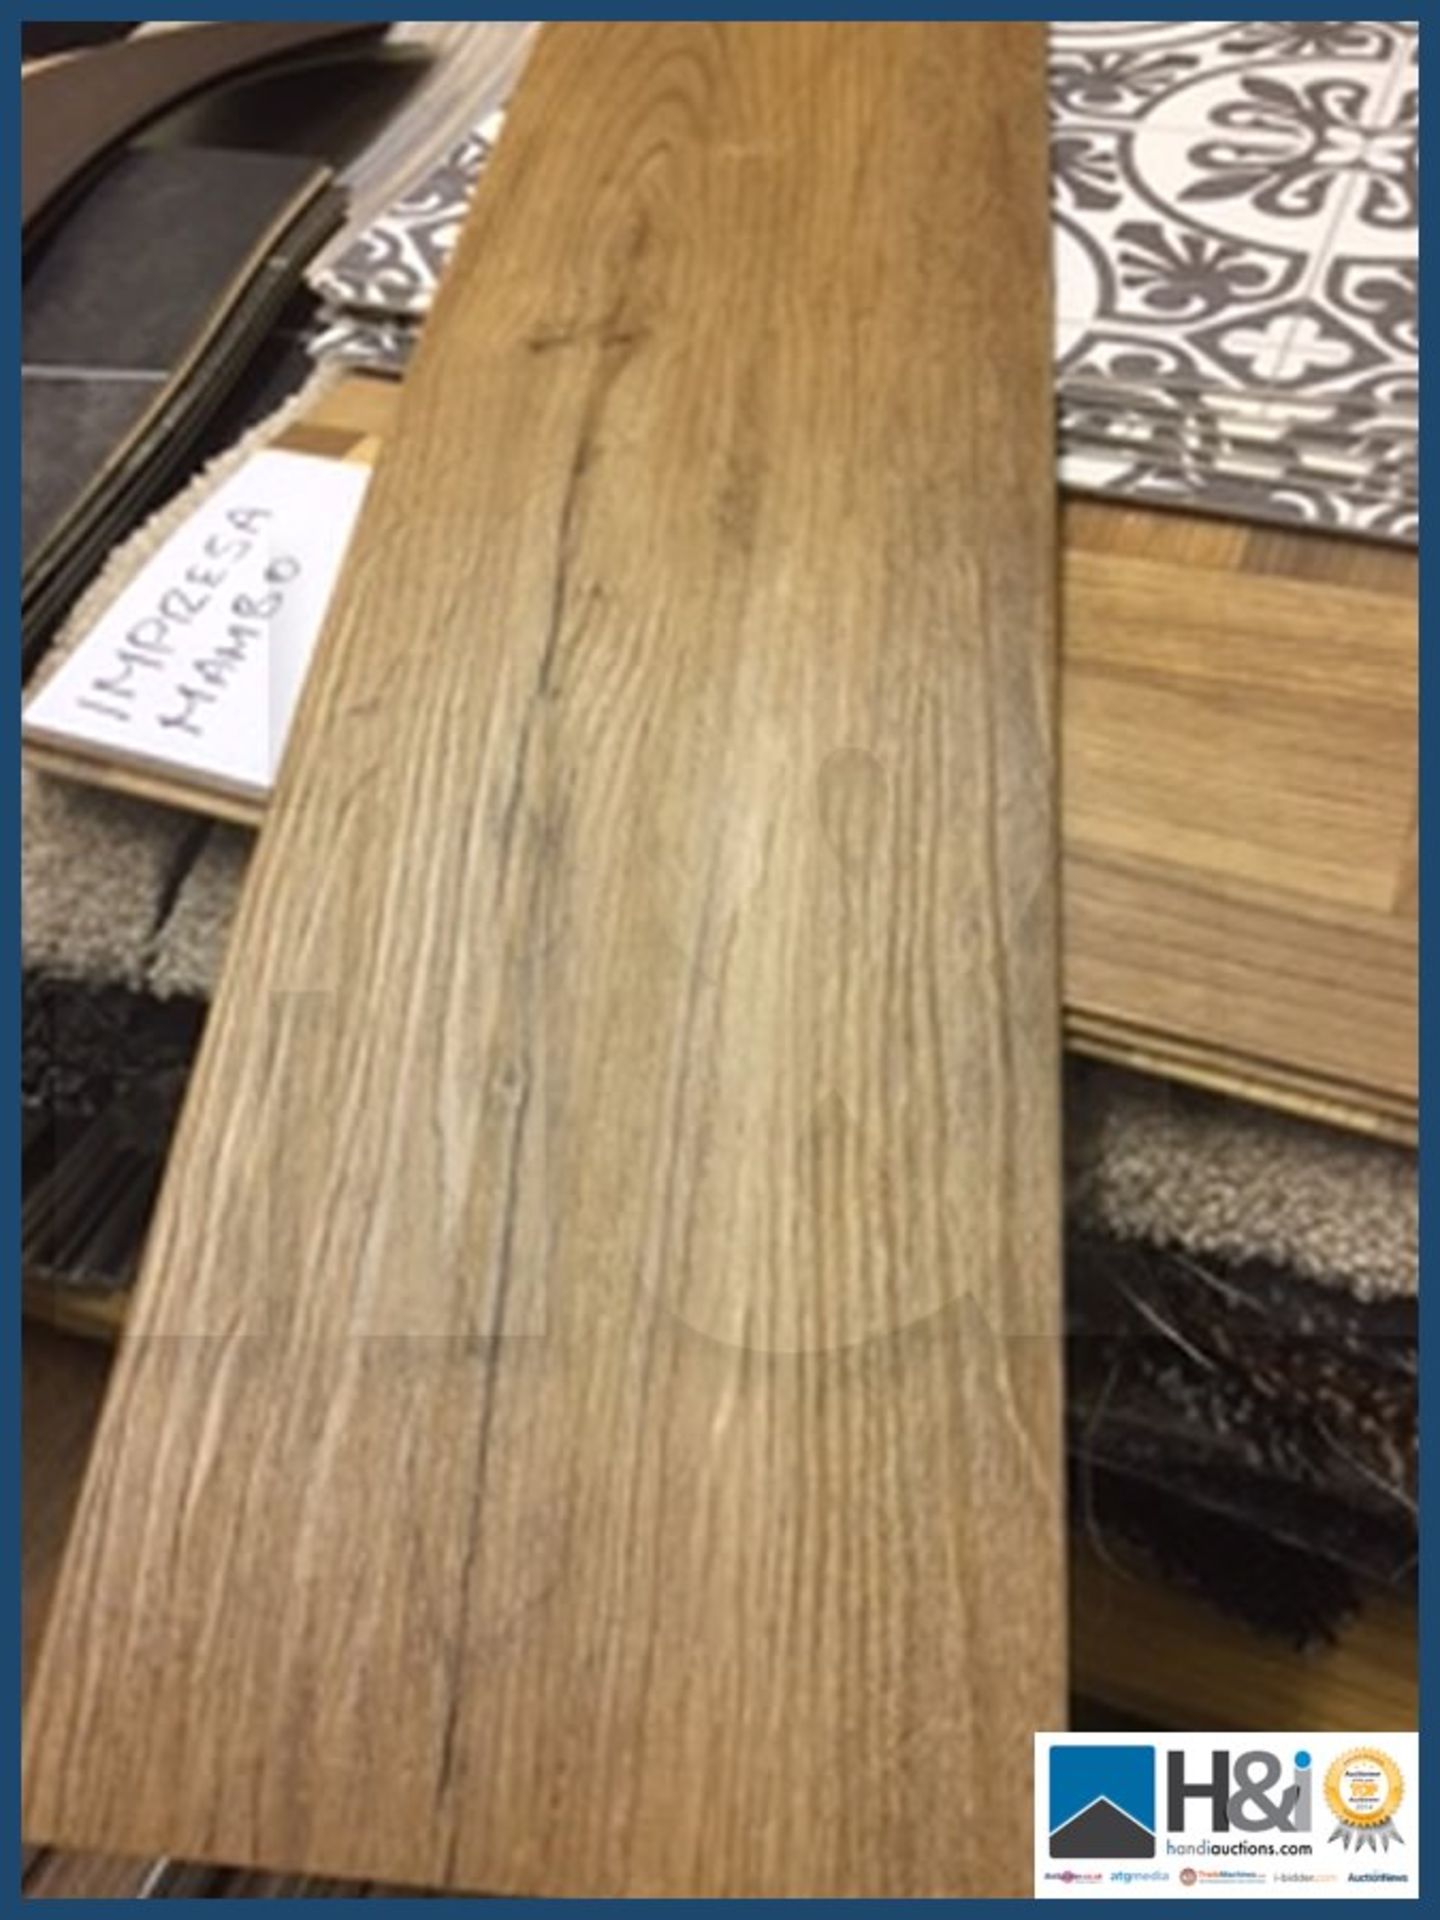 Polyflor Expona Natural Oak Wide Plank. 20.04 m2 per lot (6 boxes). RRP GBP1,170 per lot.